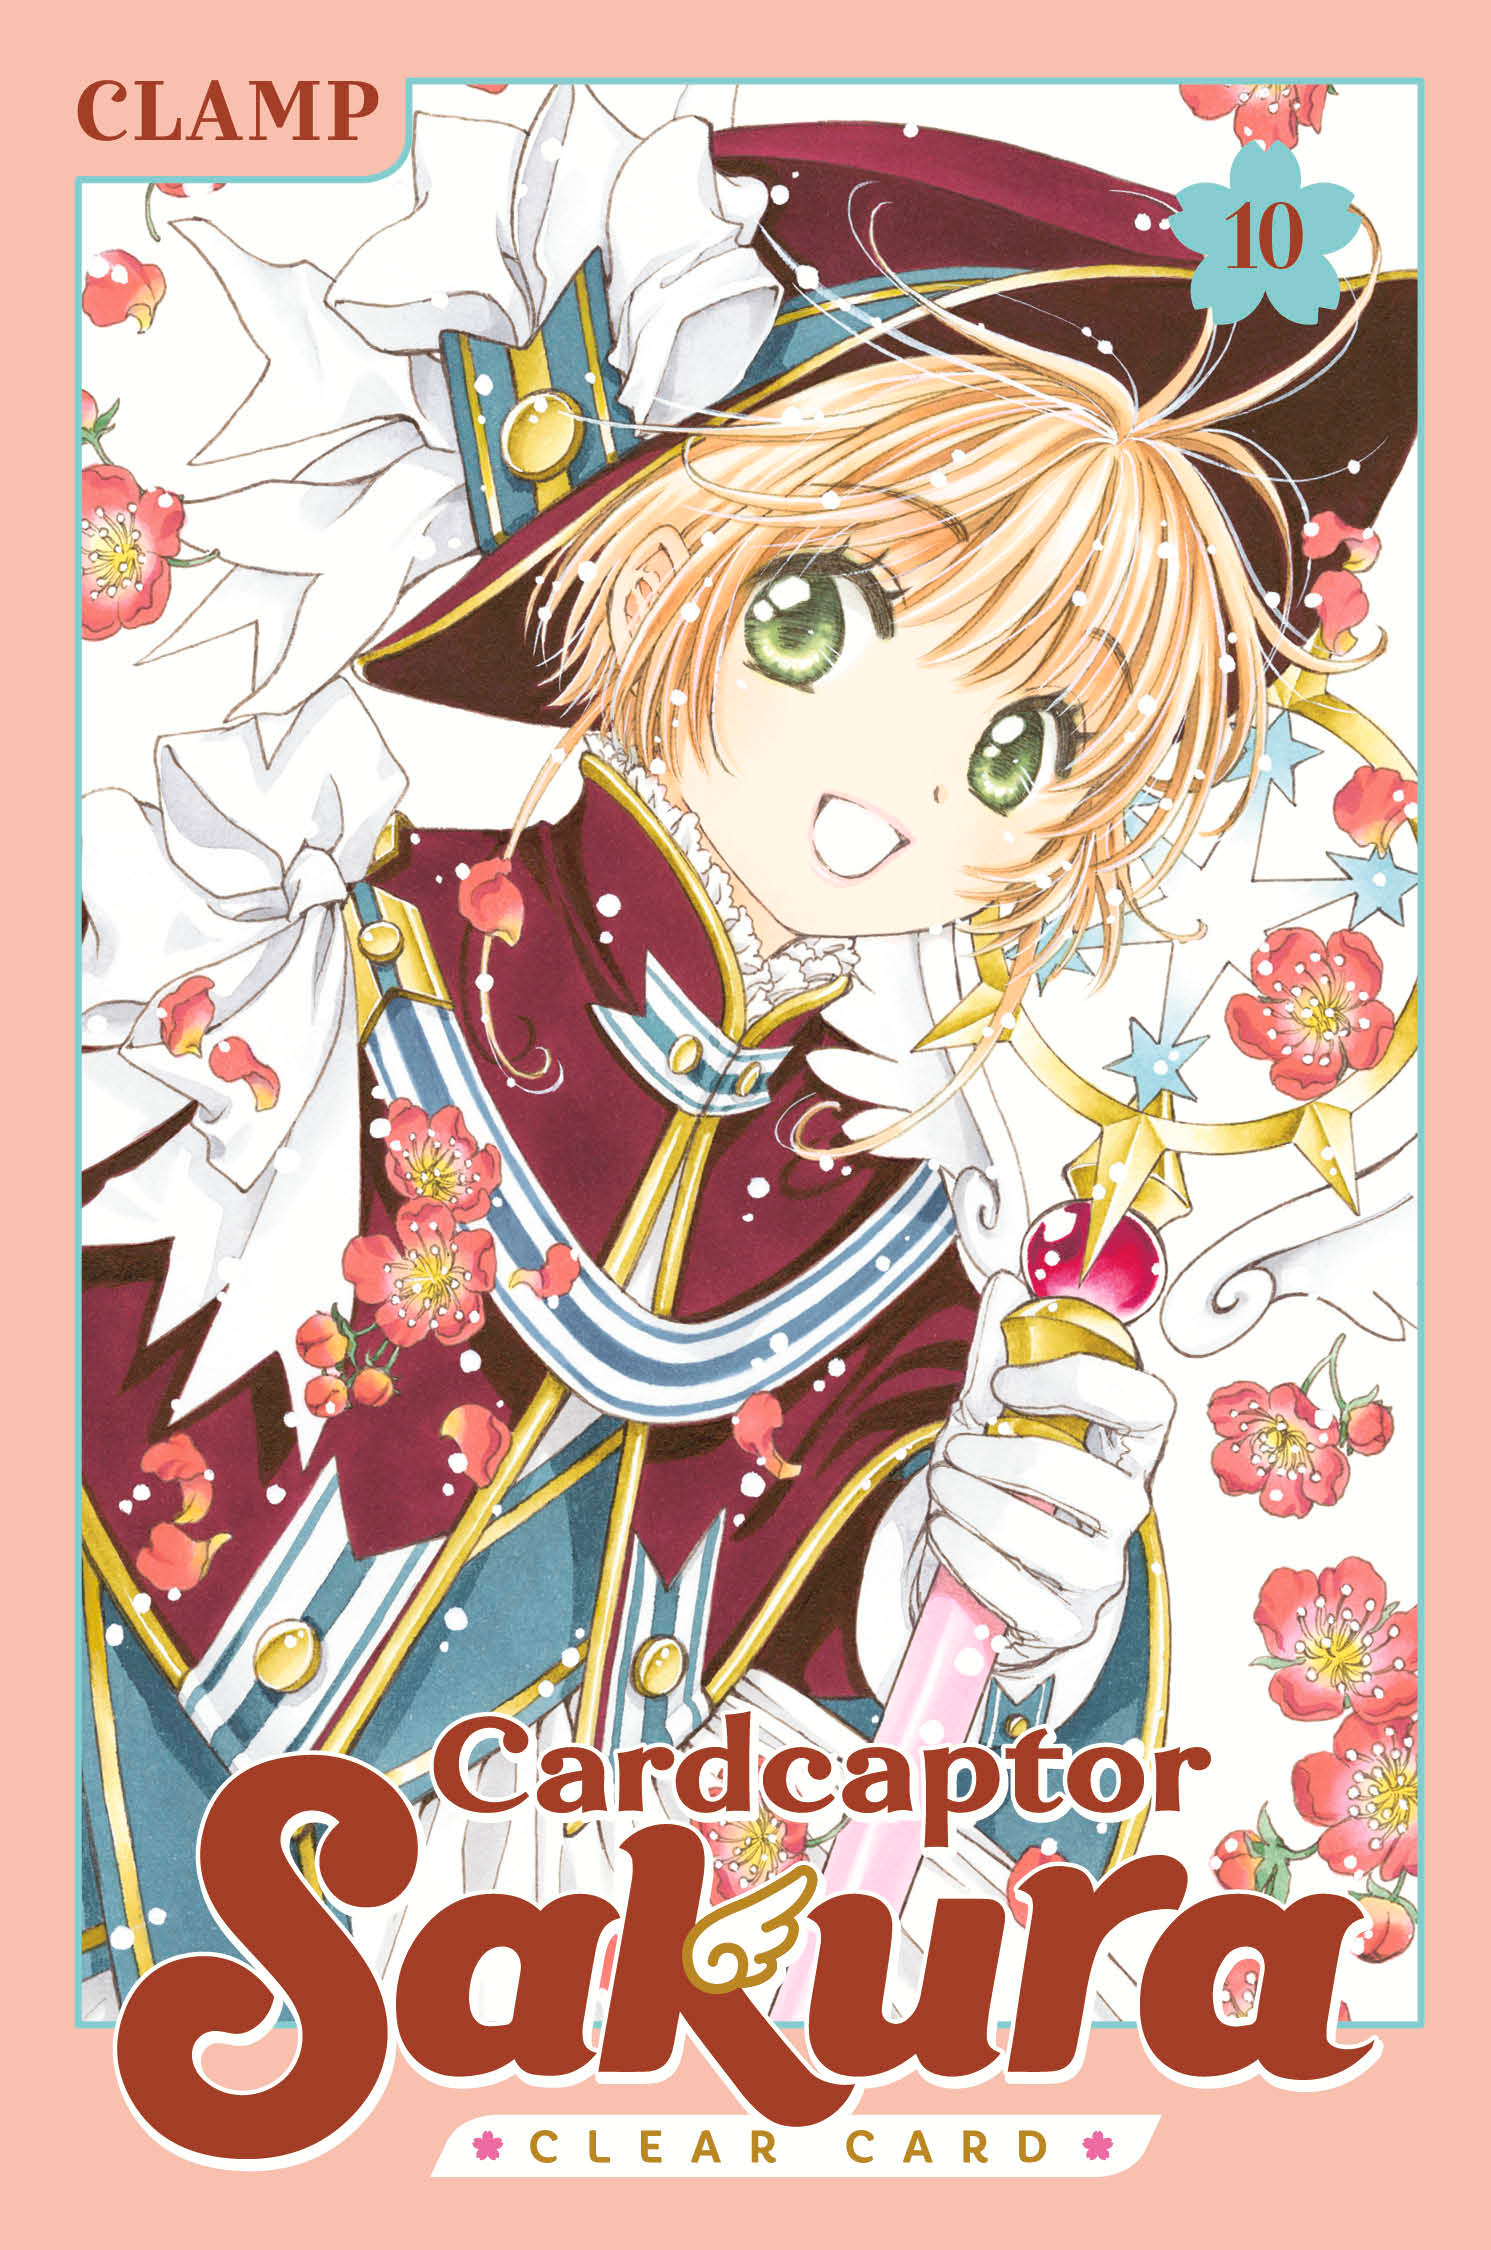 Cardcaptor Sakura Clear Card Manga Volume 10